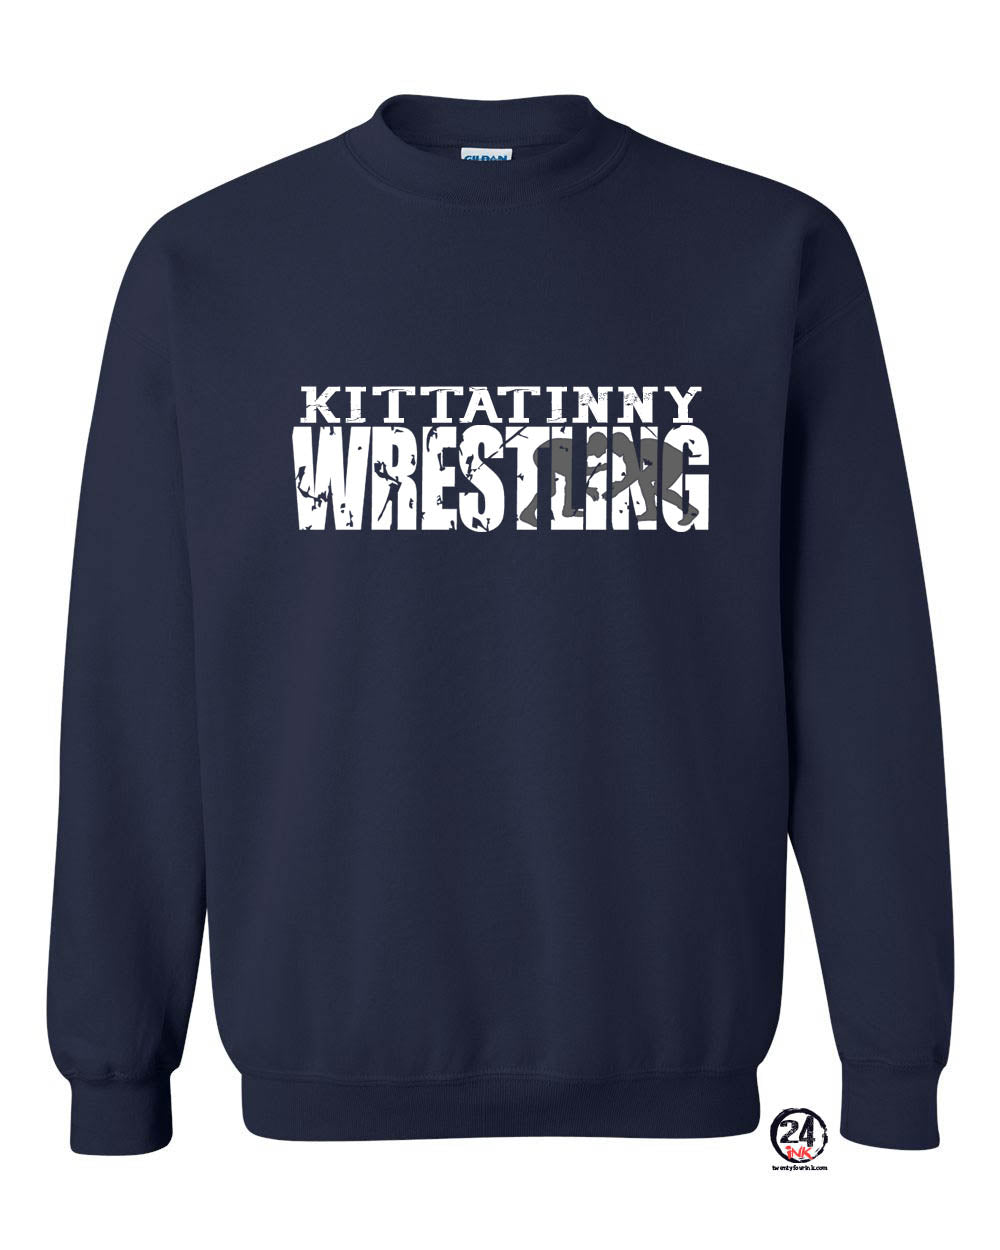 Kittatinny Wrestling Design 2 non hooded sweatshirt